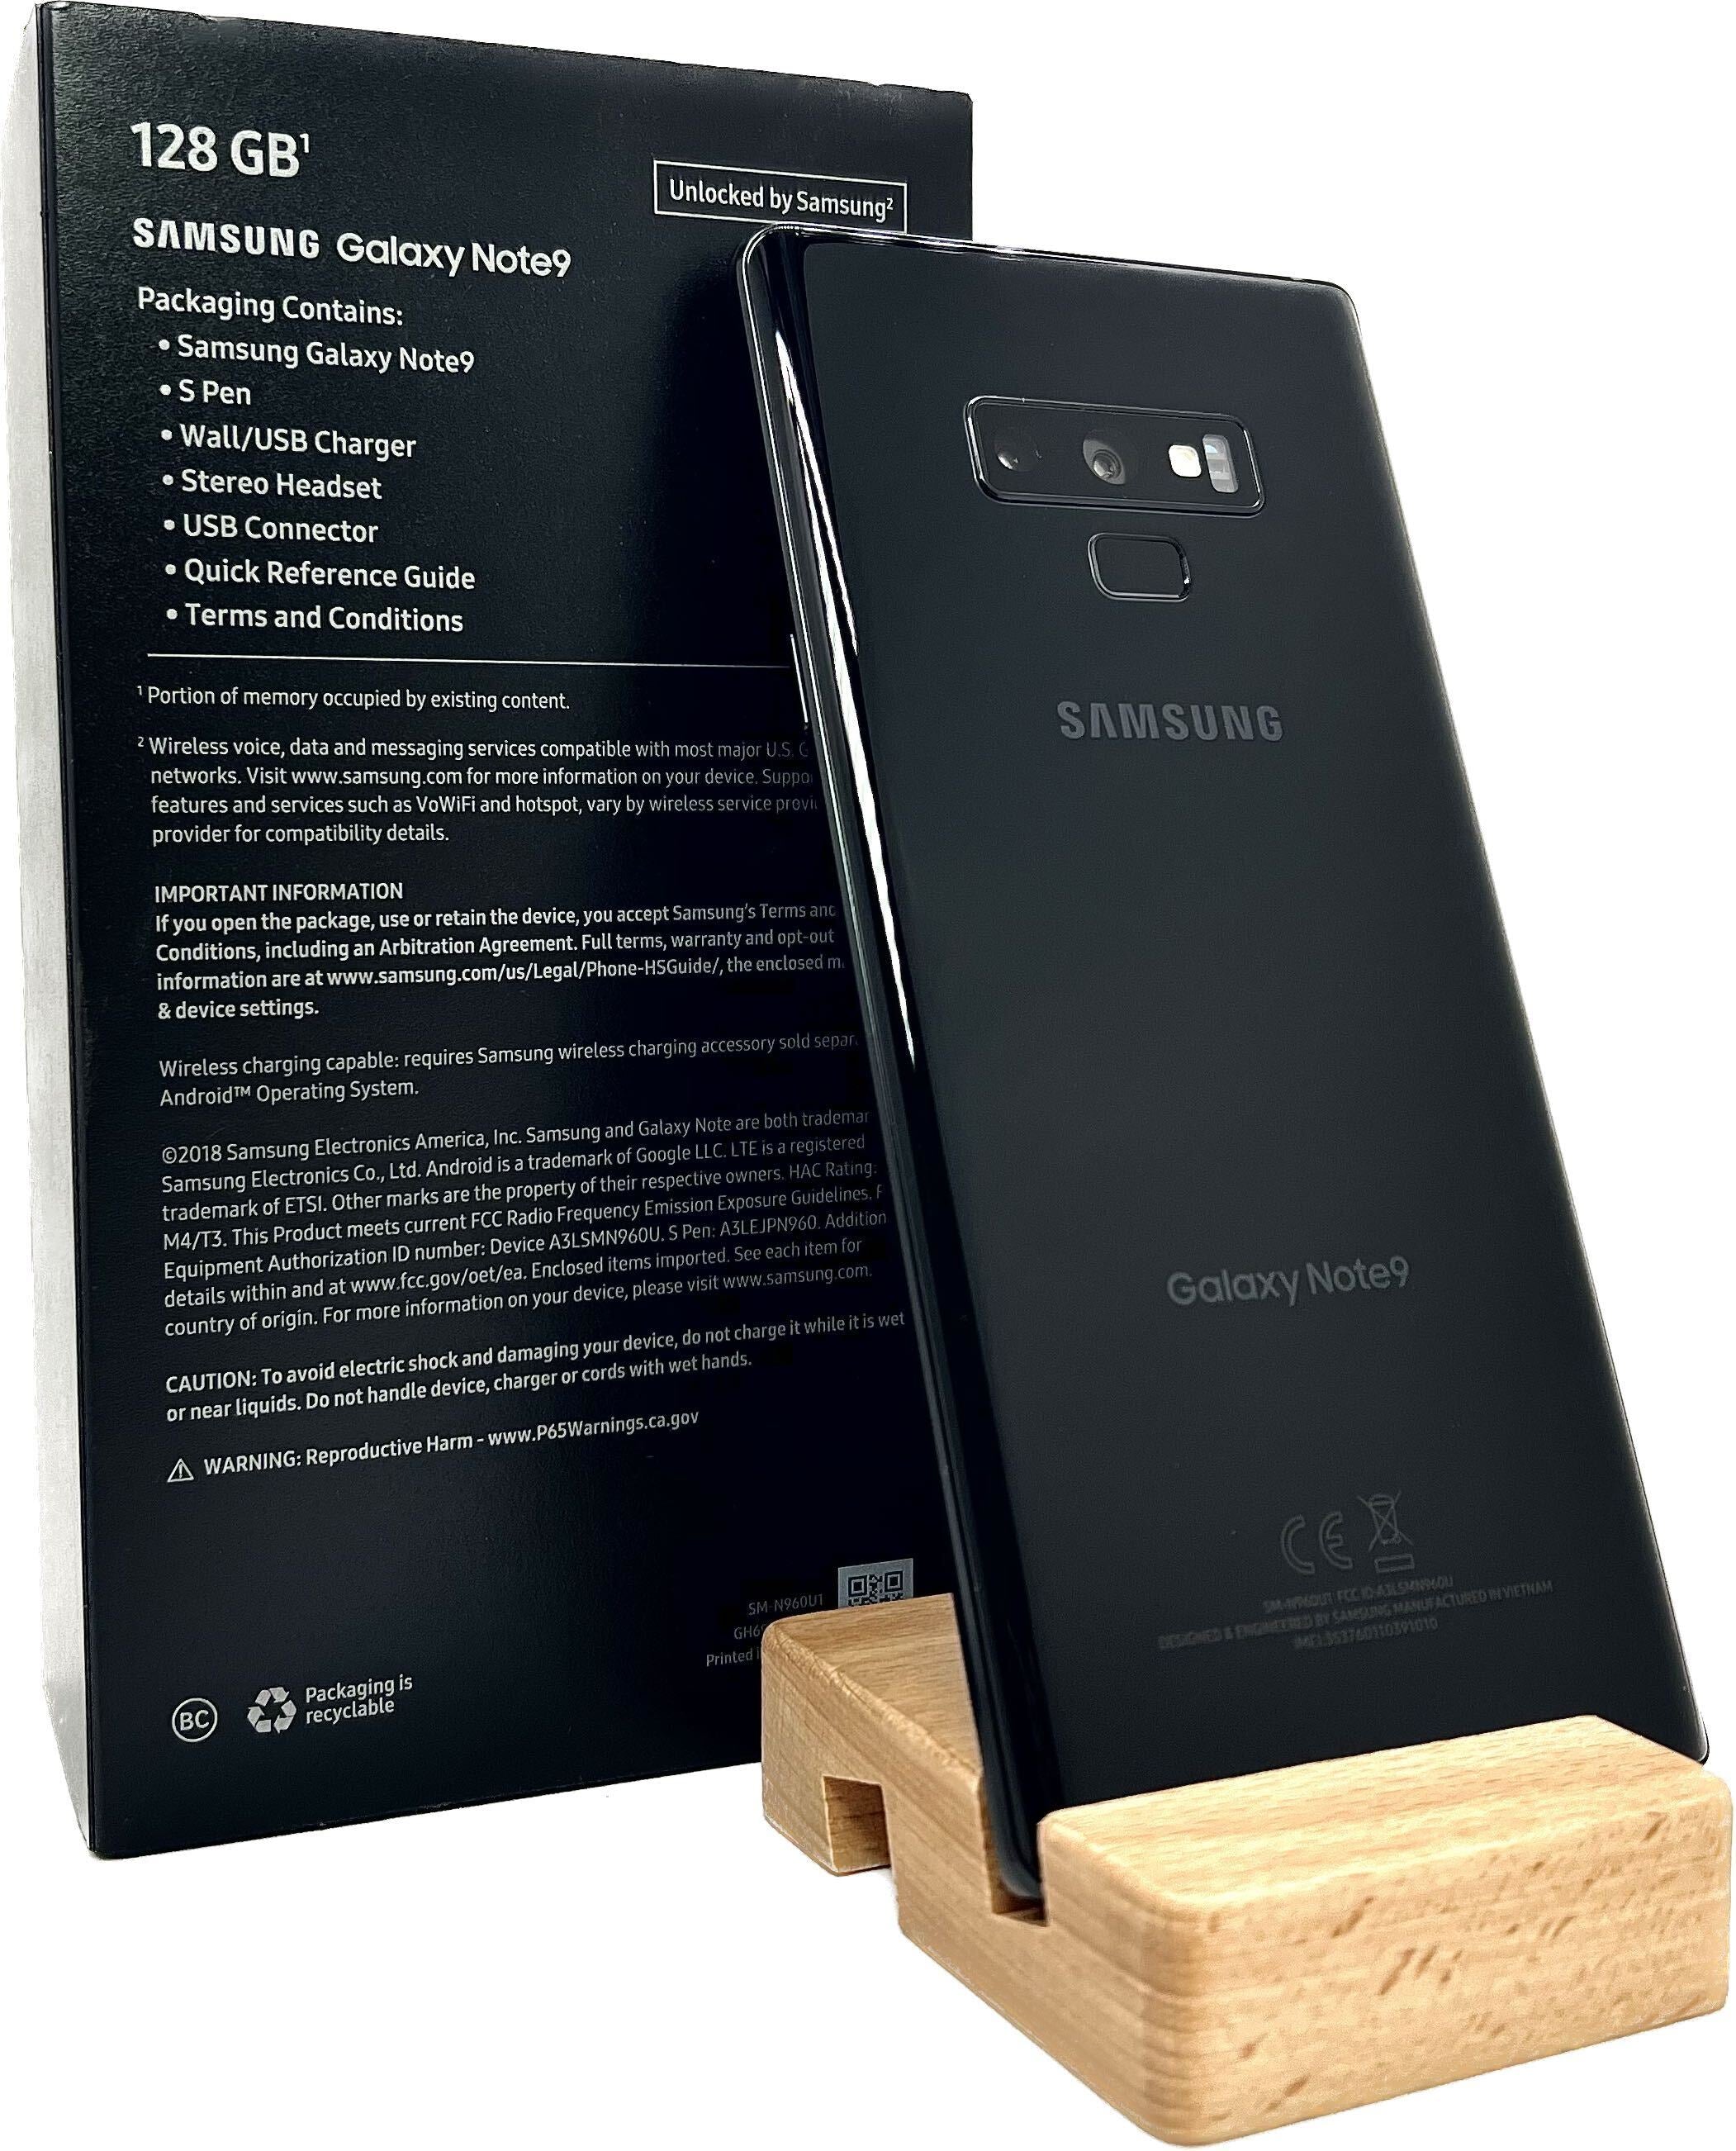 Samsung Galaxy Note 9 - Certified Renewed (Unlocked)